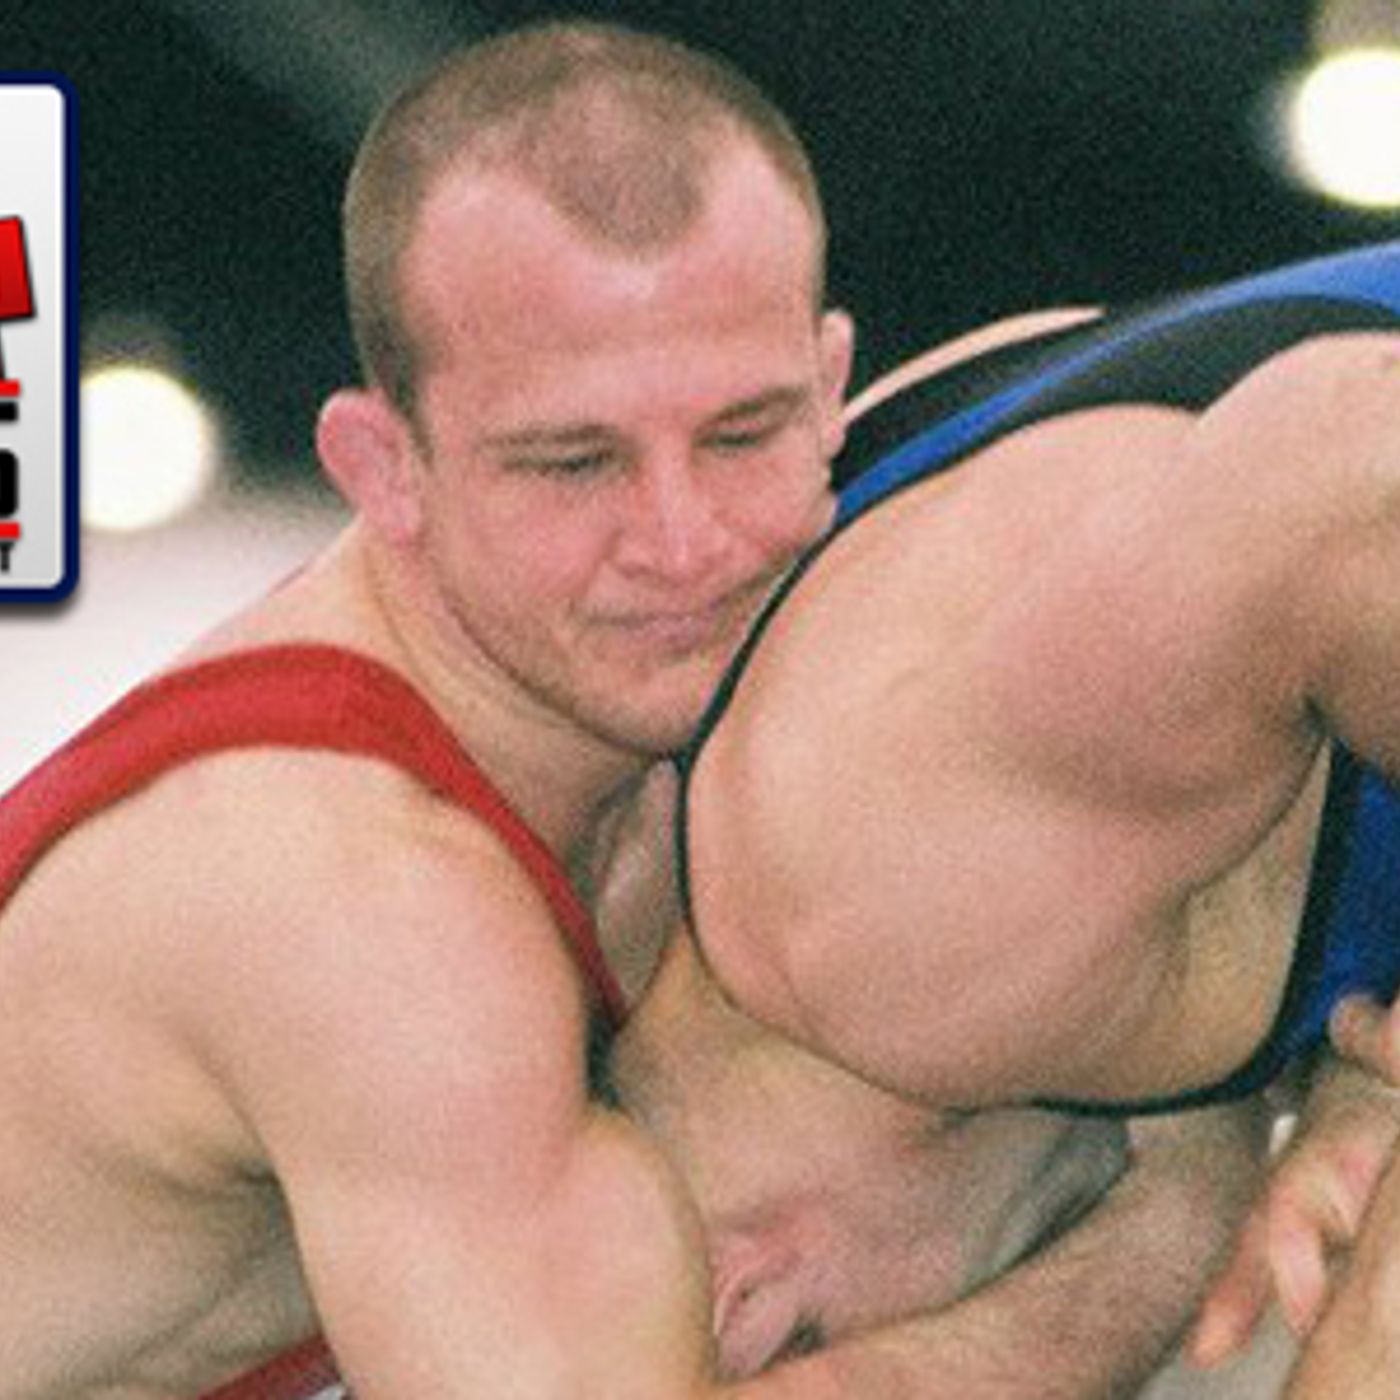 BP94: Brandon Paulson, 1996 Olympic silver medalist in Greco-Roman wrestling